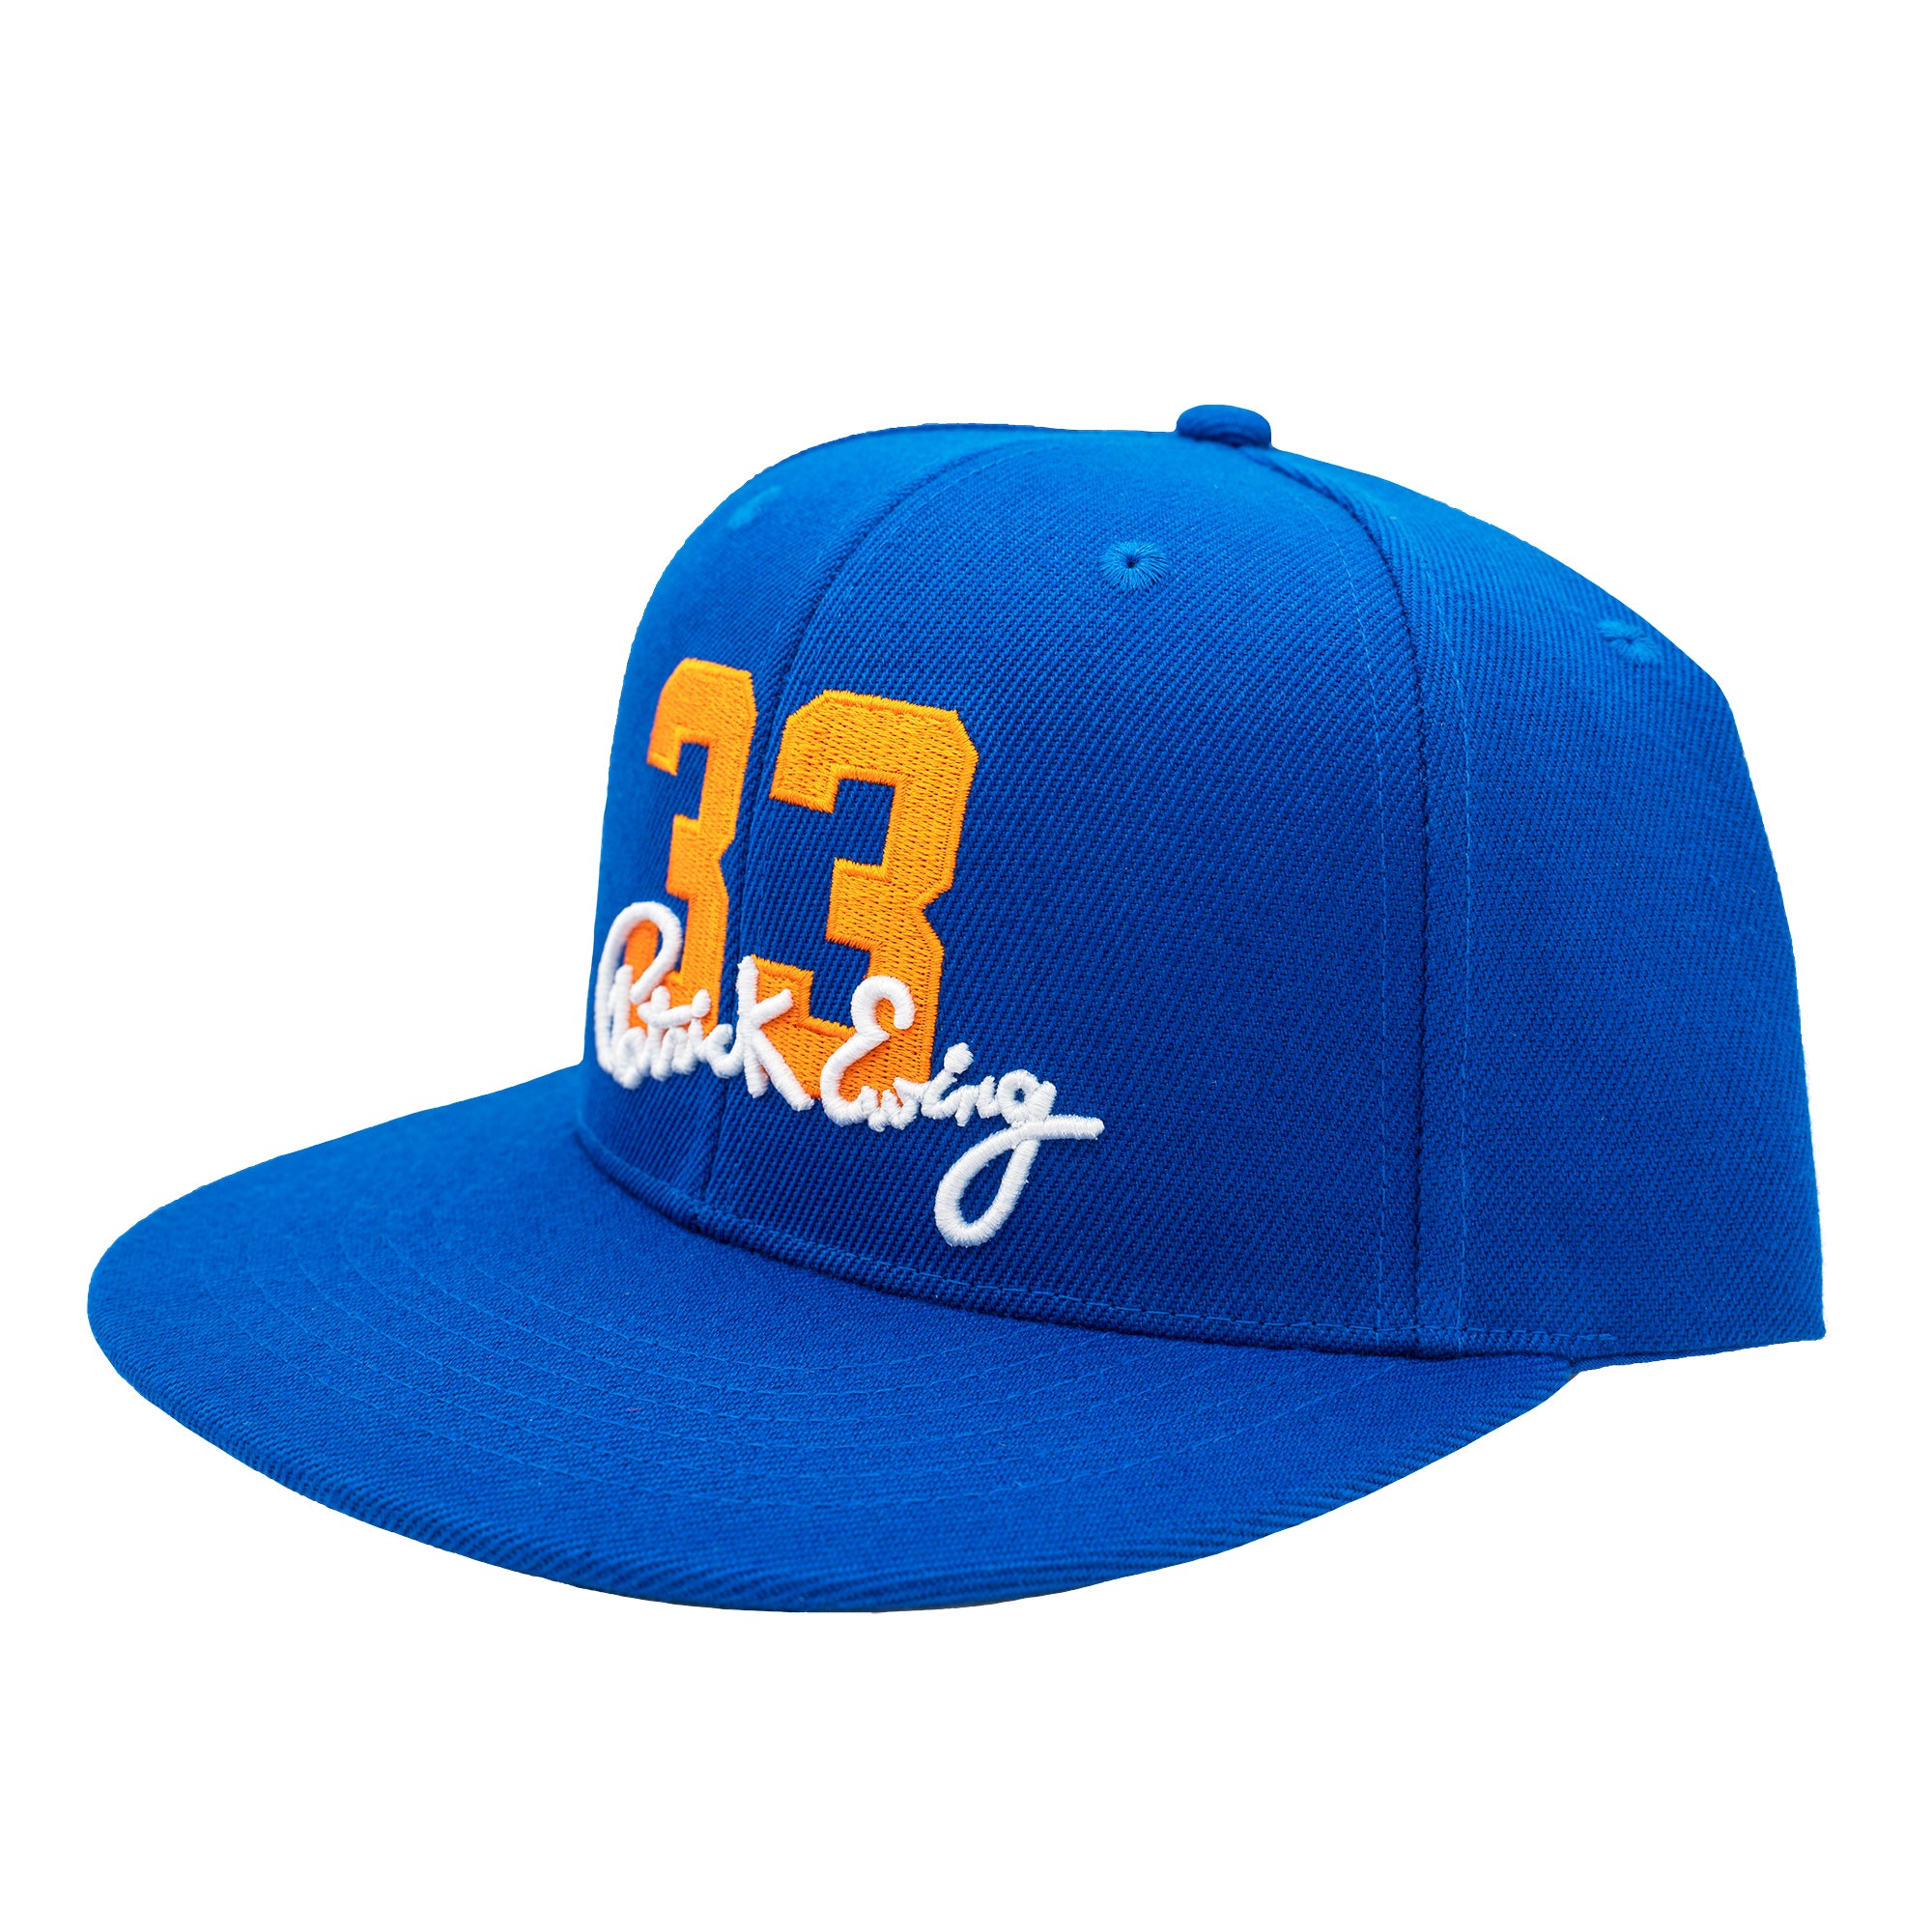 Ewing Royal 33 Hat